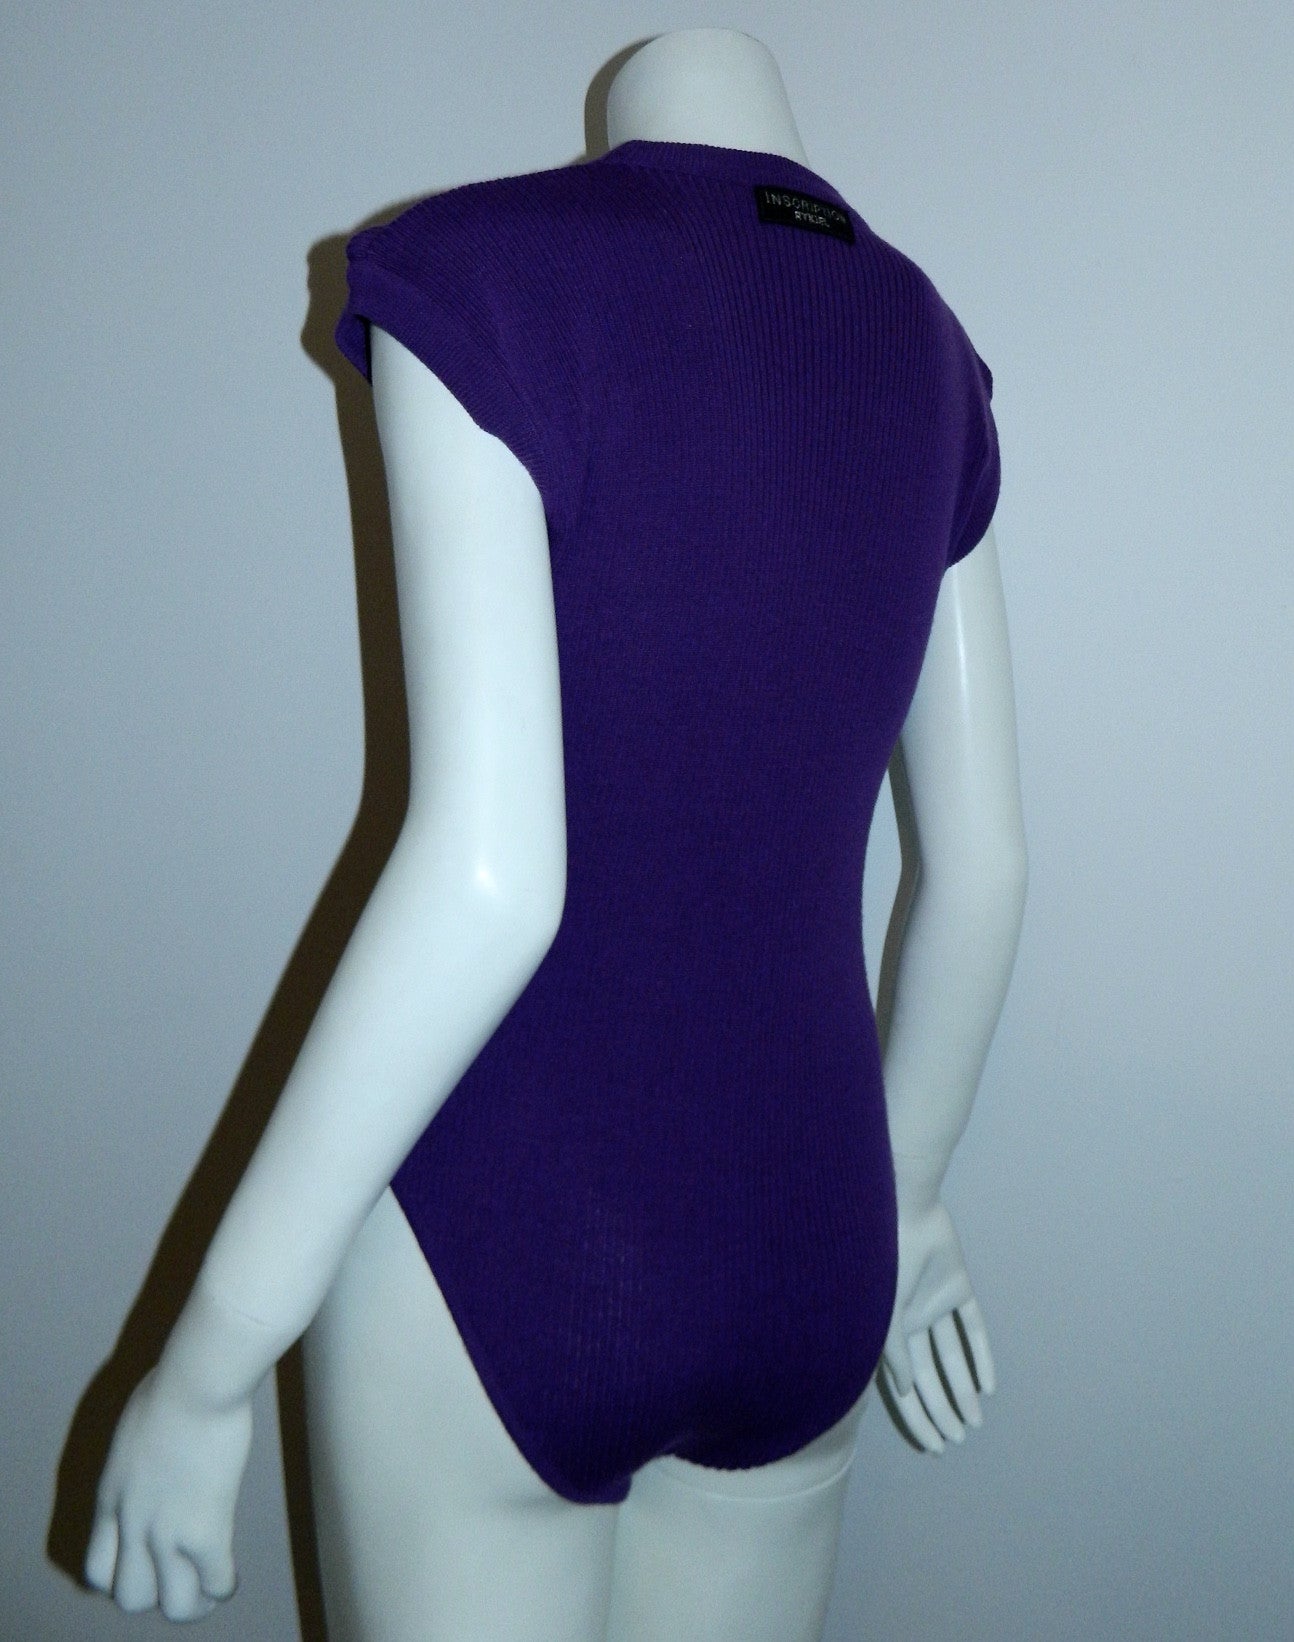 1980s bodysuit vintage Sonia Rykiel Inscription wool rib knit top sweater